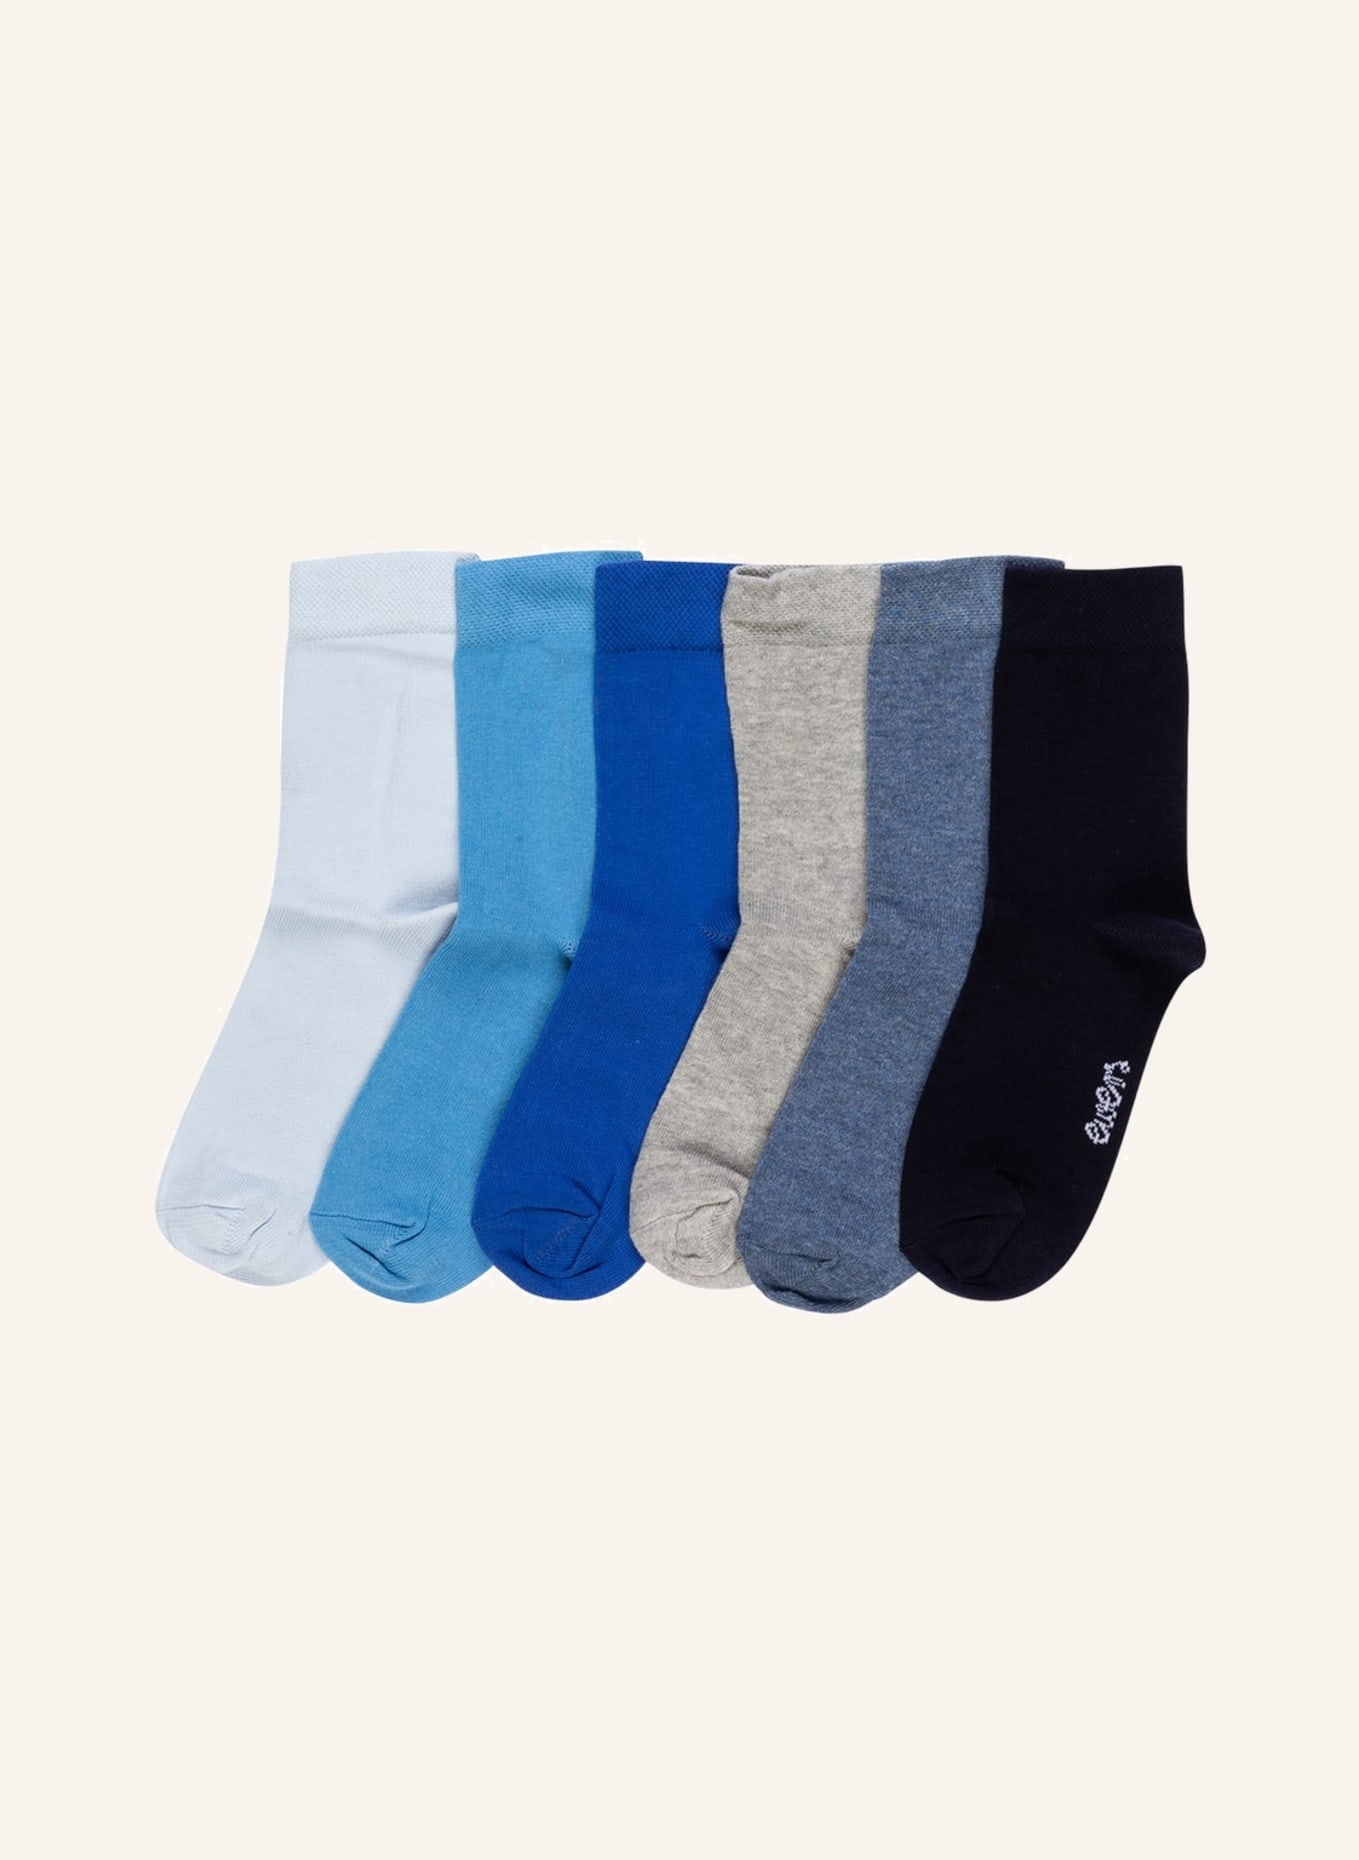 ewers COLLECTION 6er-Pack Socken, Farbe: 30 30 hellblau - türkis - marine (Bild 1)